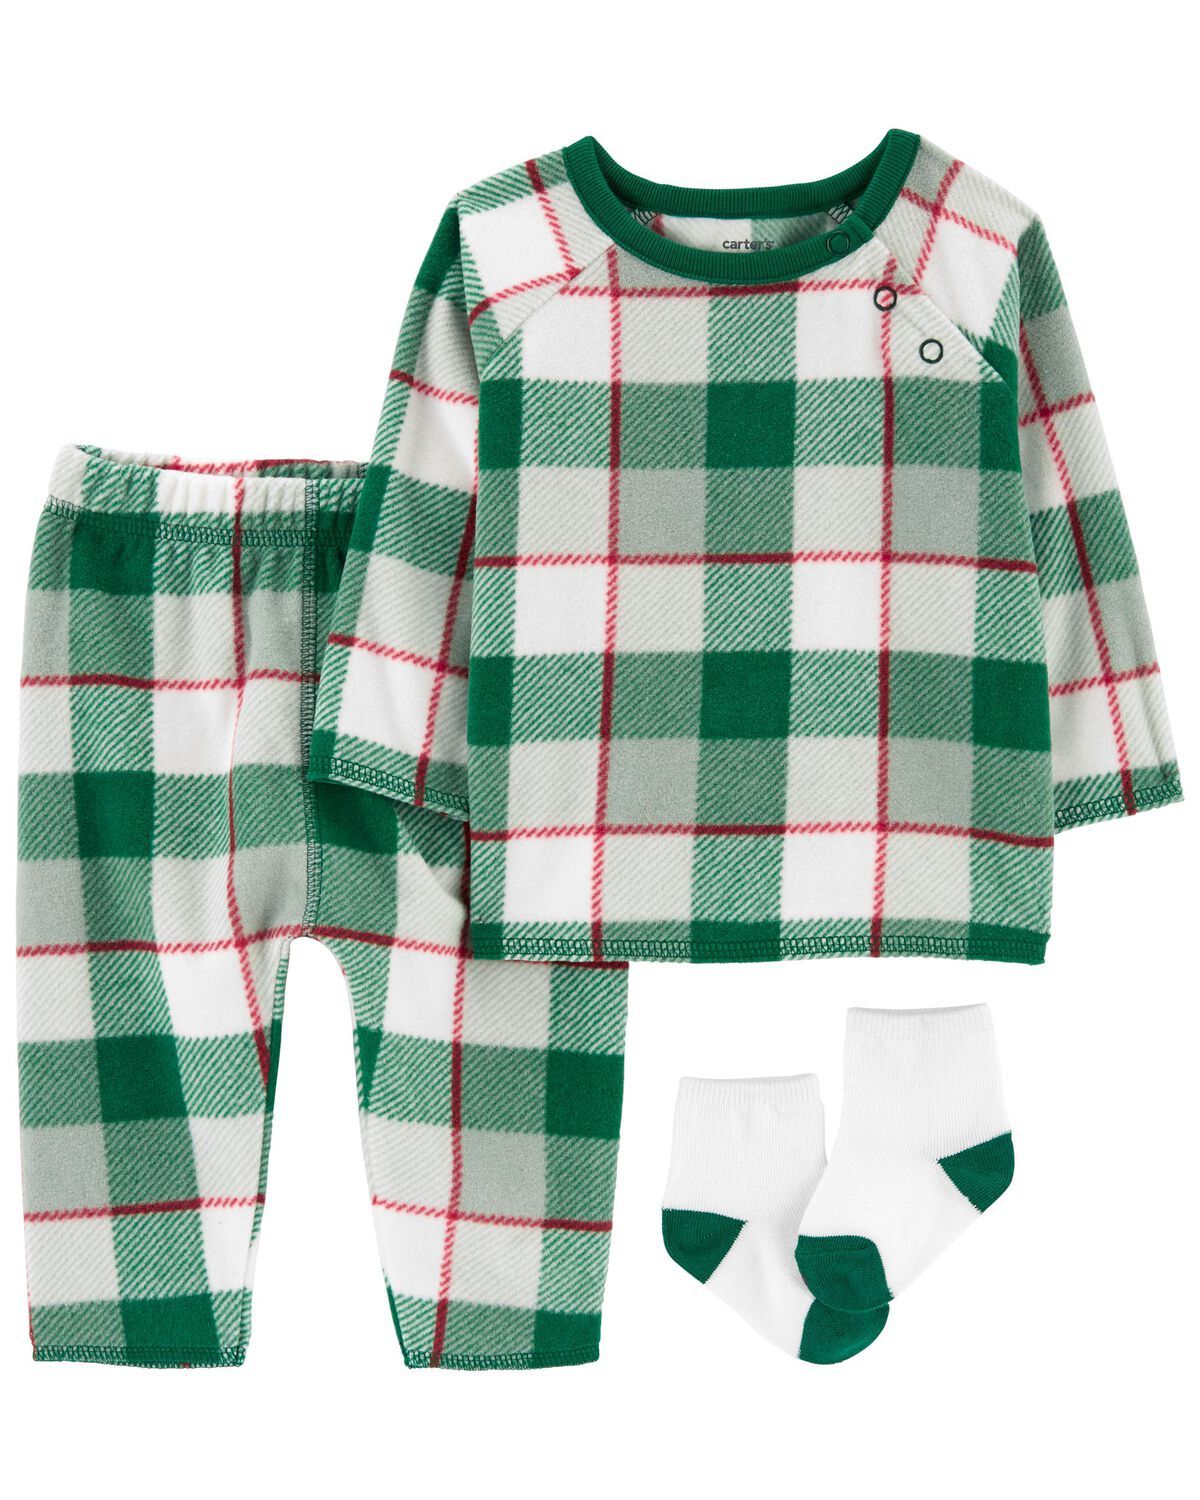 Green Baby 3-Piece Plaid Outfit Set | carters.com | Carter's